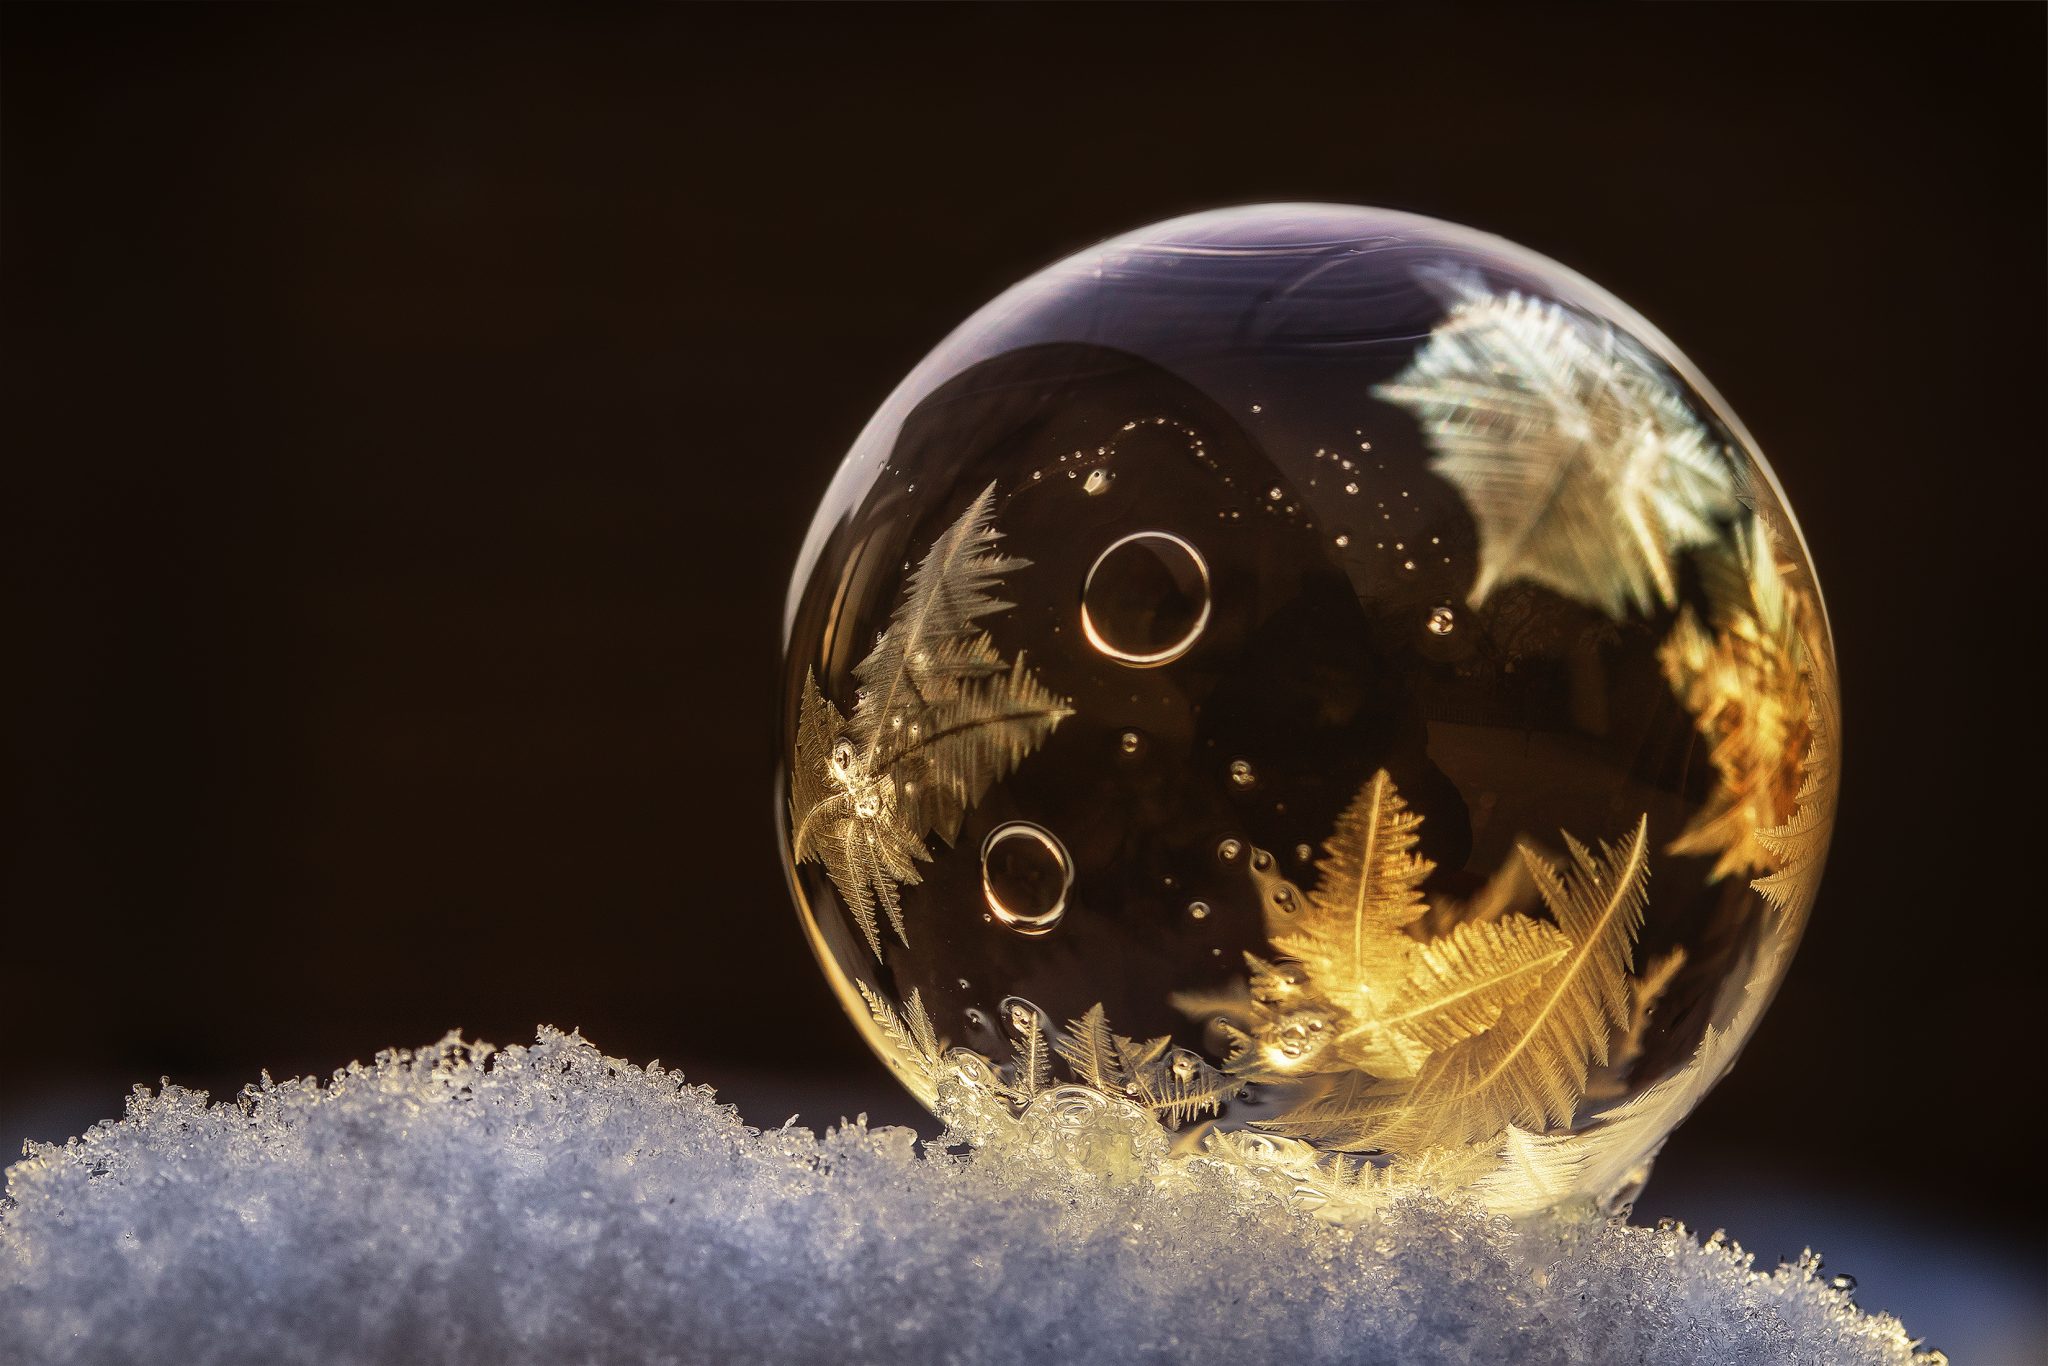 Snow day activities - frozen bubble